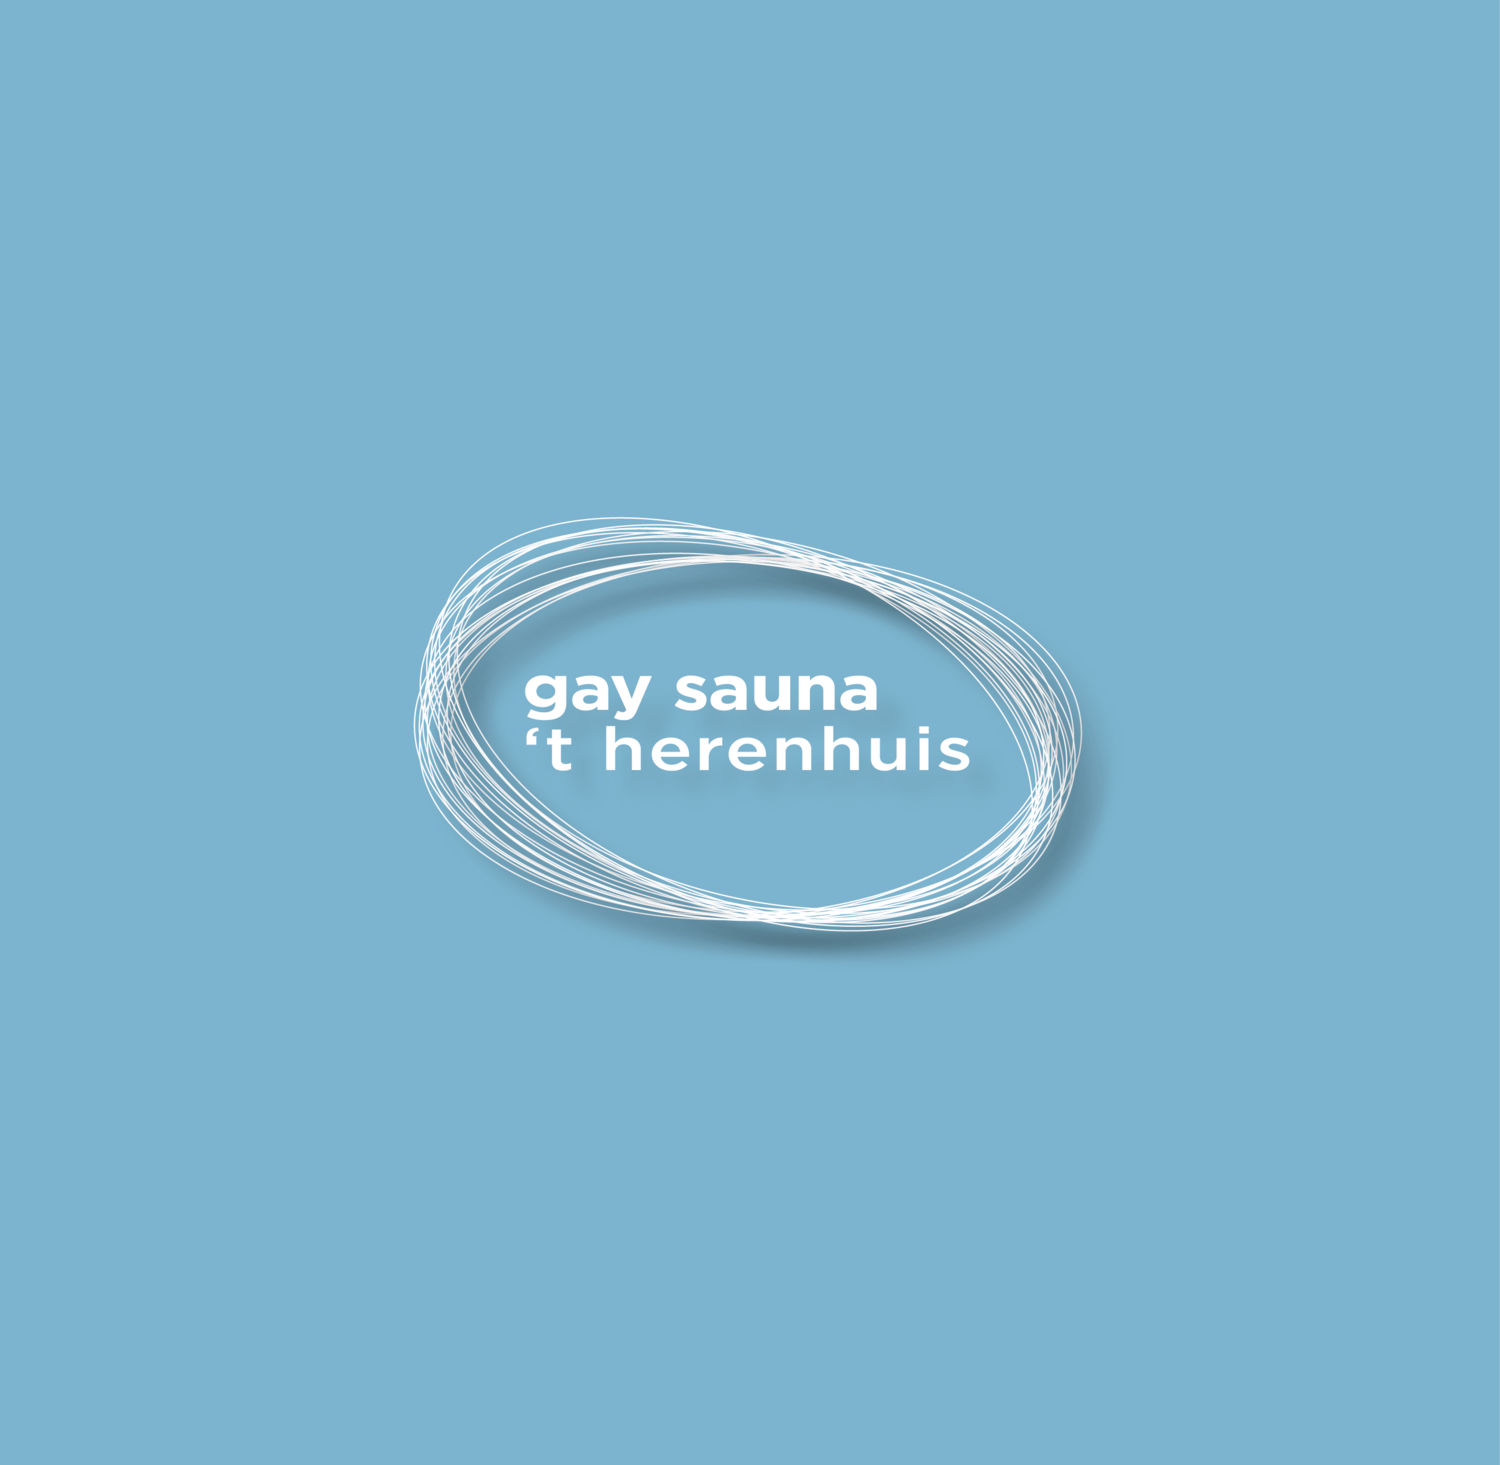 www.gaysaunaherenhuis.be